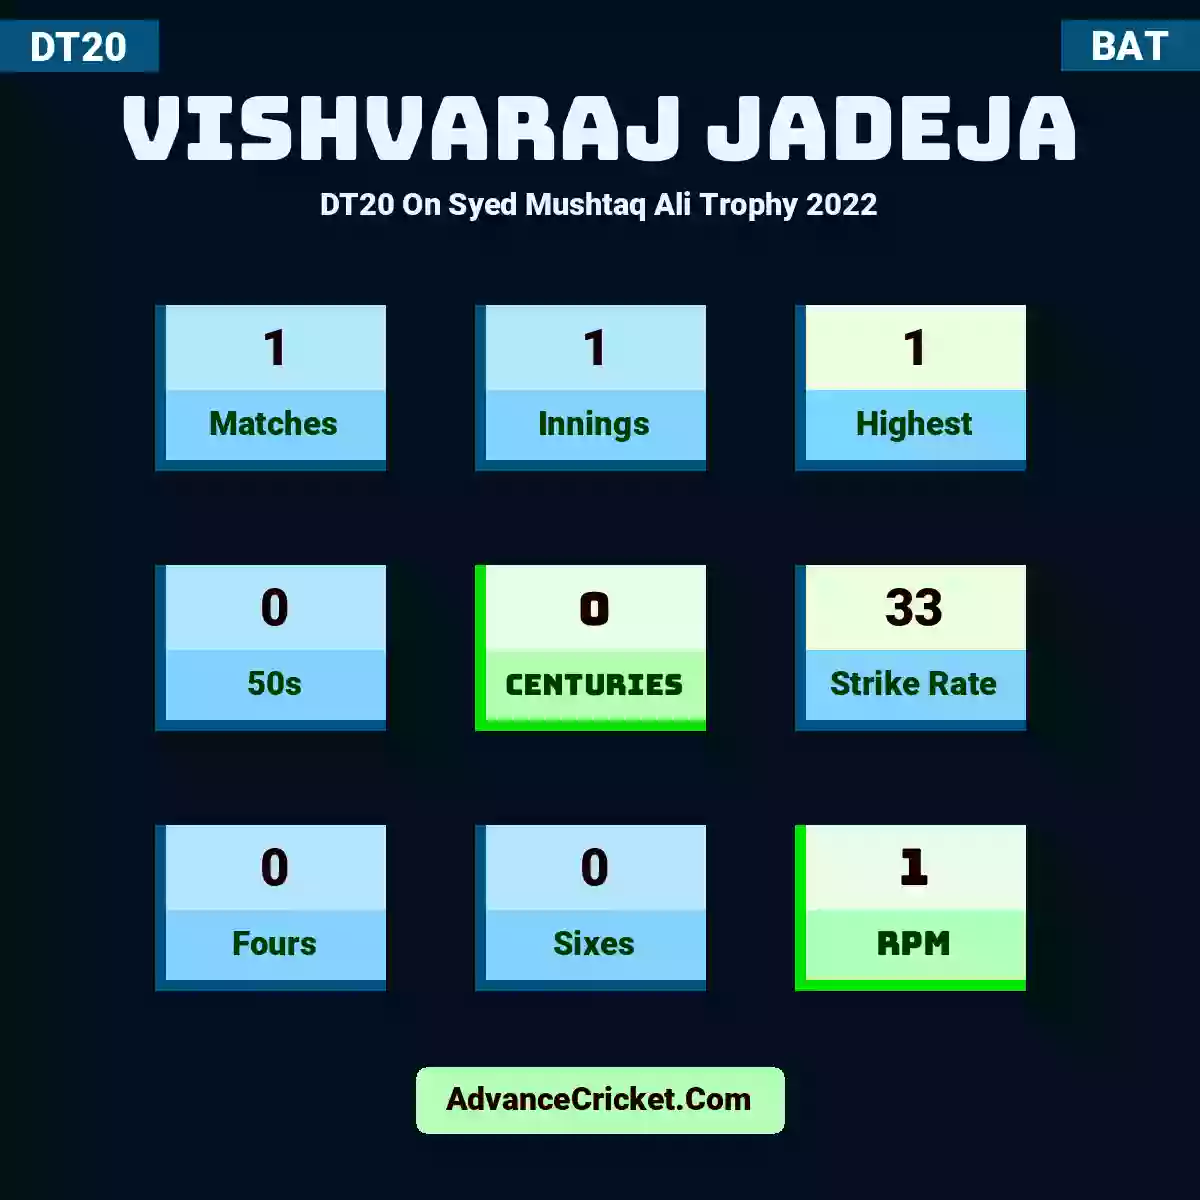 Vishvaraj Jadeja DT20  On Syed Mushtaq Ali Trophy 2022, Vishvaraj Jadeja played 1 matches, scored 1 runs as highest, 0 half-centuries, and 0 centuries, with a strike rate of 33. V.Jadeja hit 0 fours and 0 sixes, with an RPM of 1.